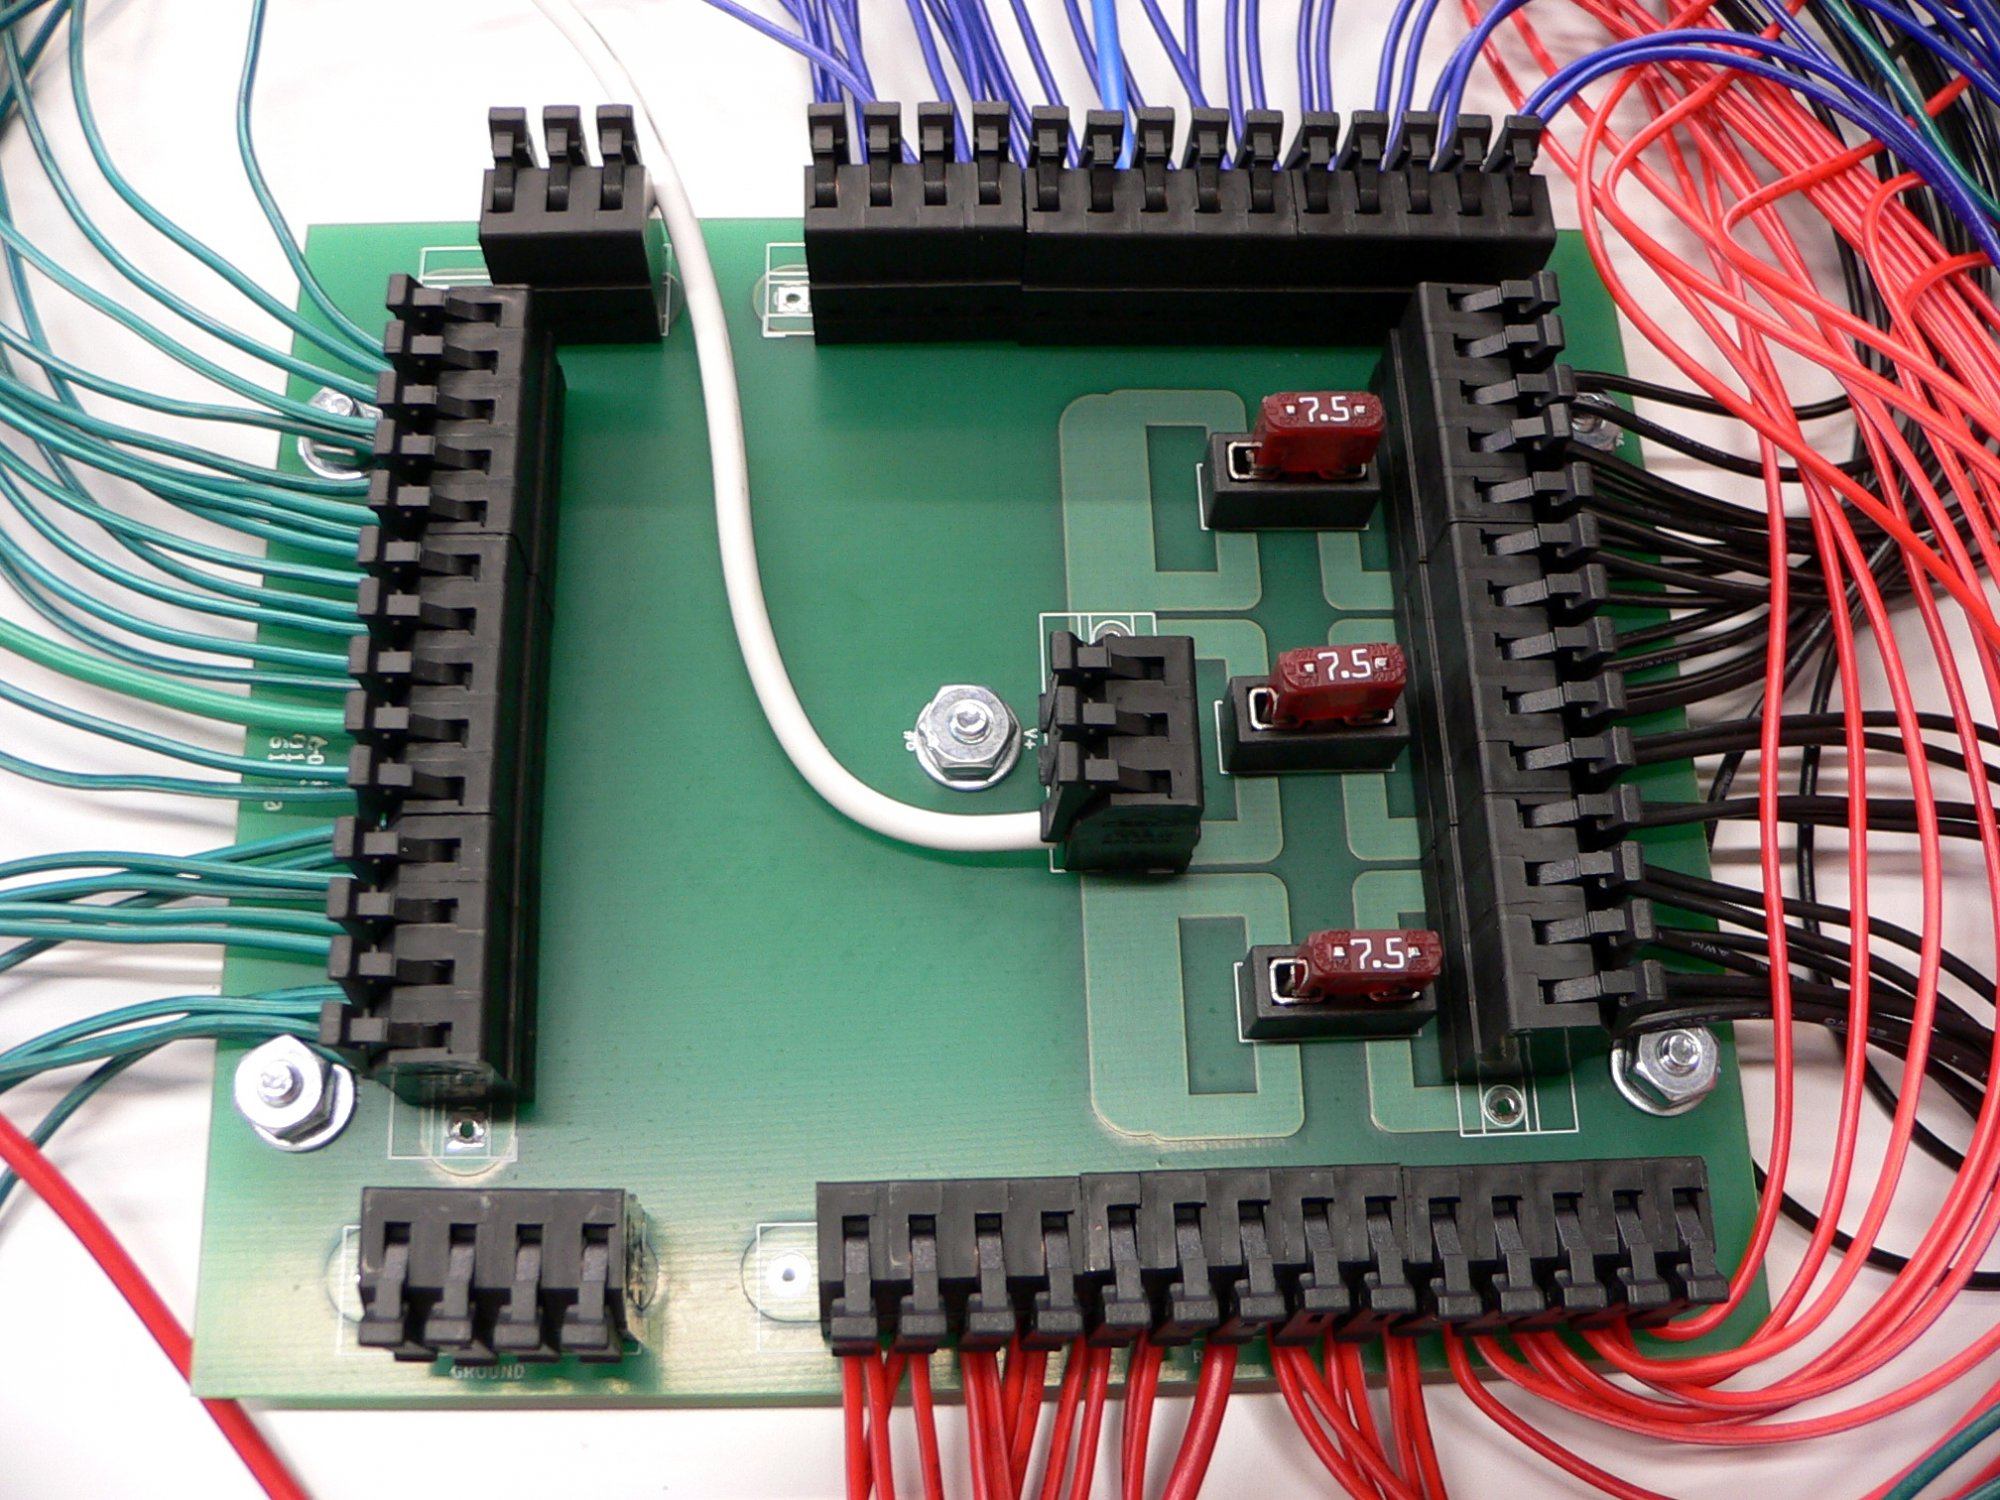 LED_wiring_PCB.JPG